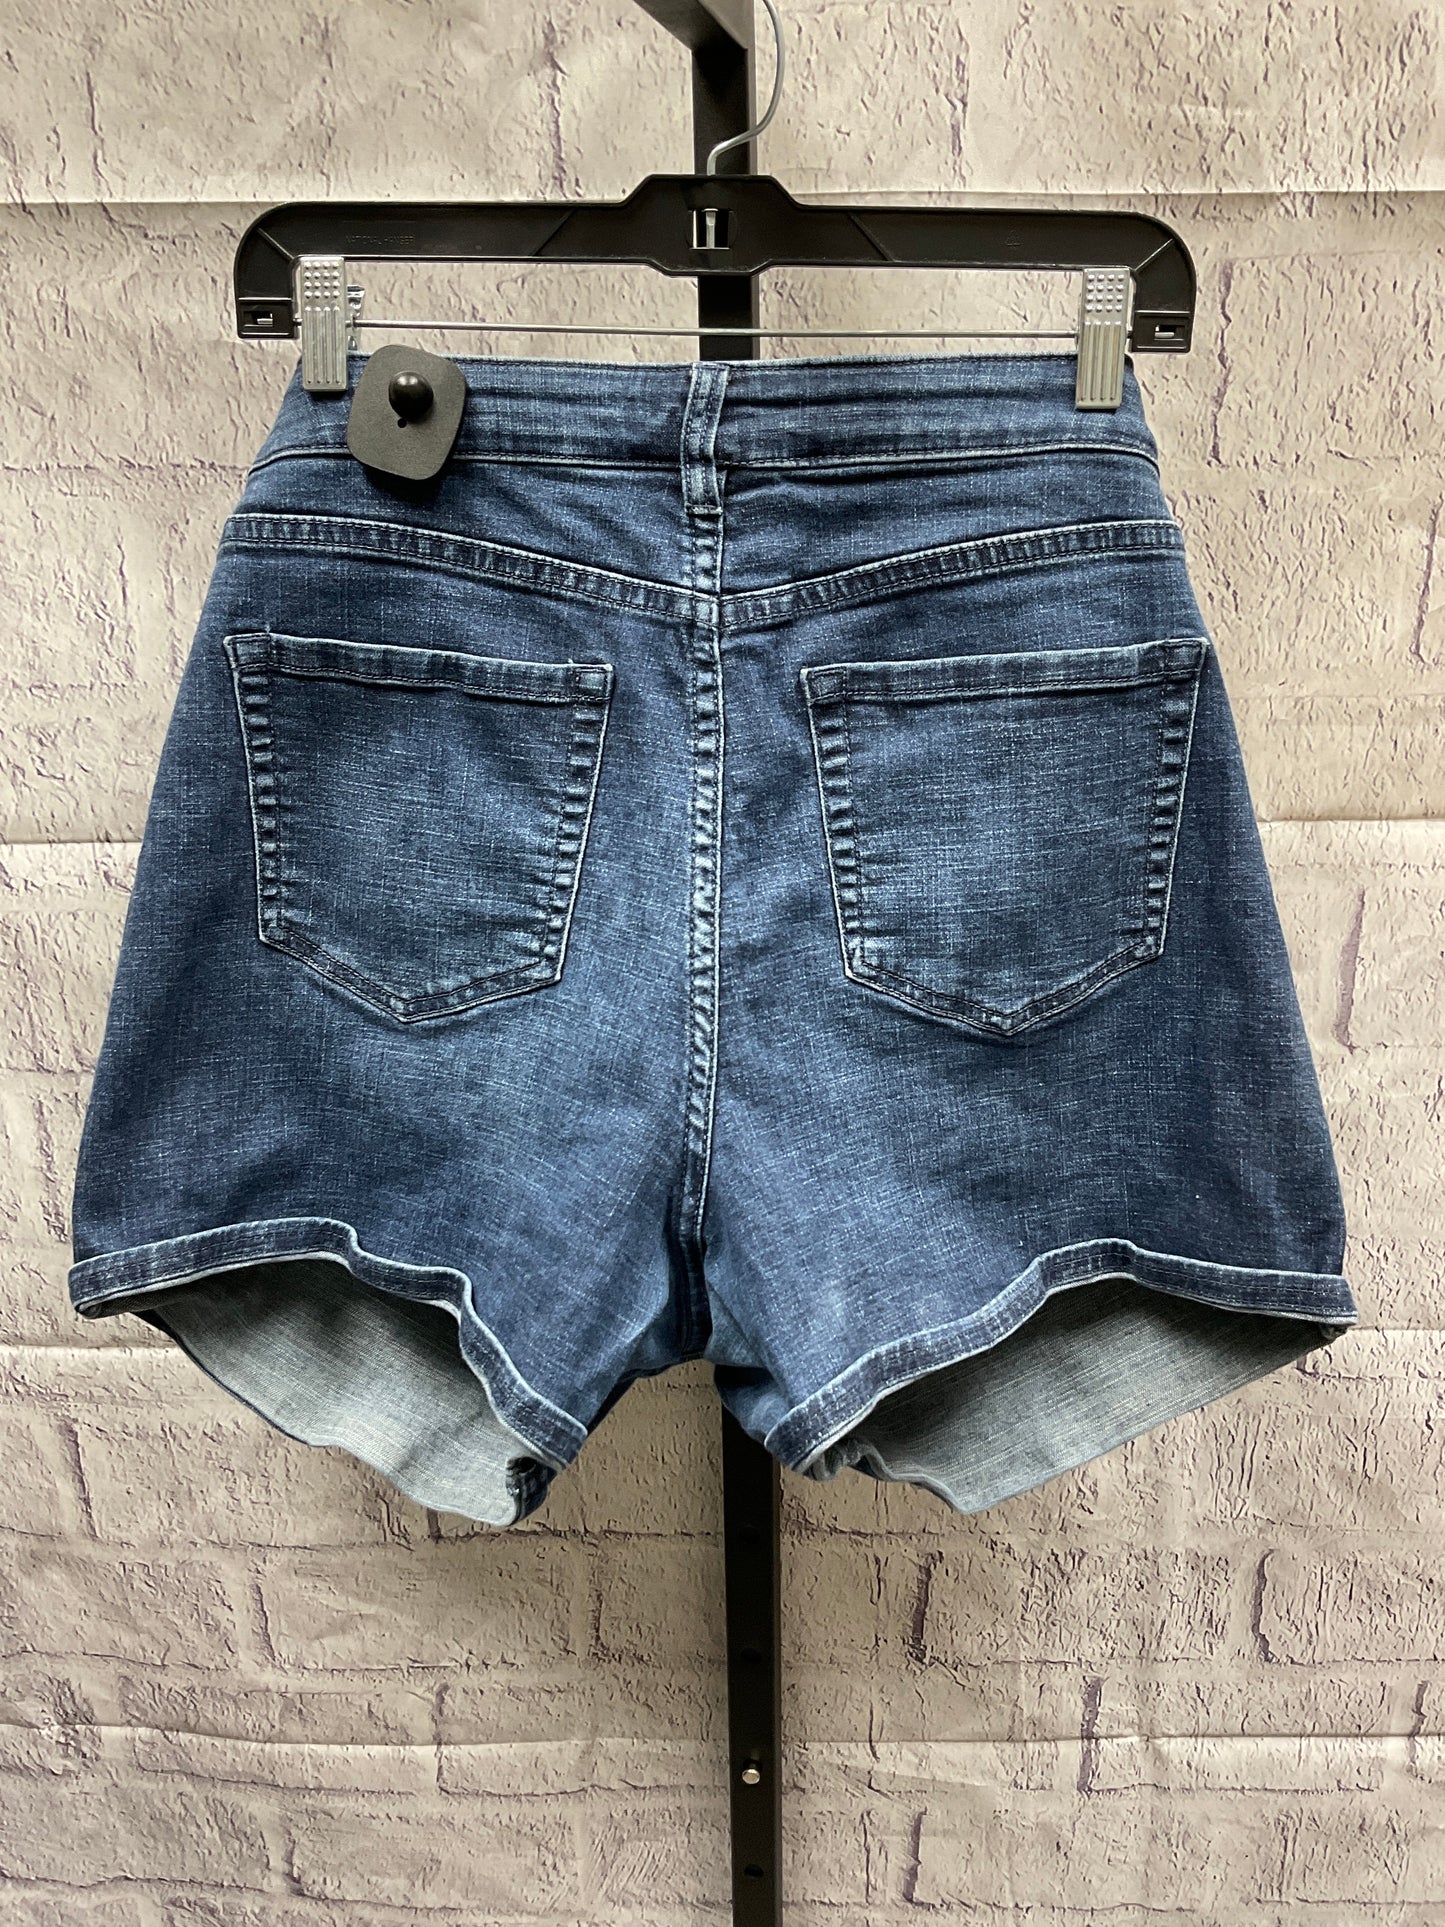 Shorts By Venezia  Size: 16